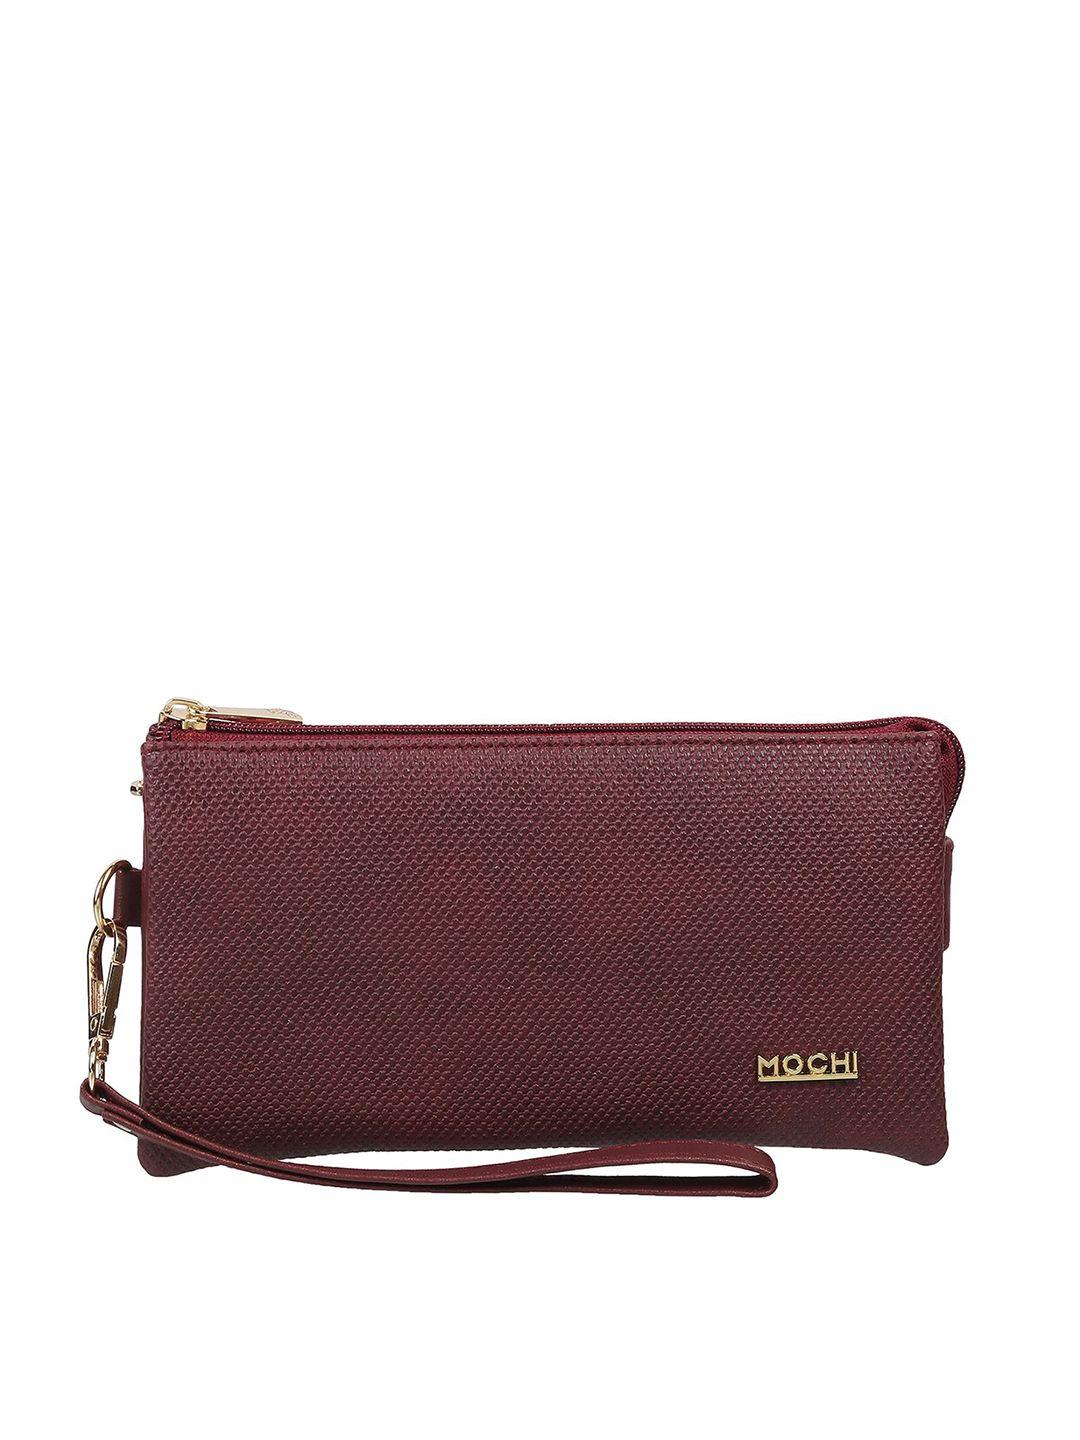 mochi-burgundy-textured-purse-clutch